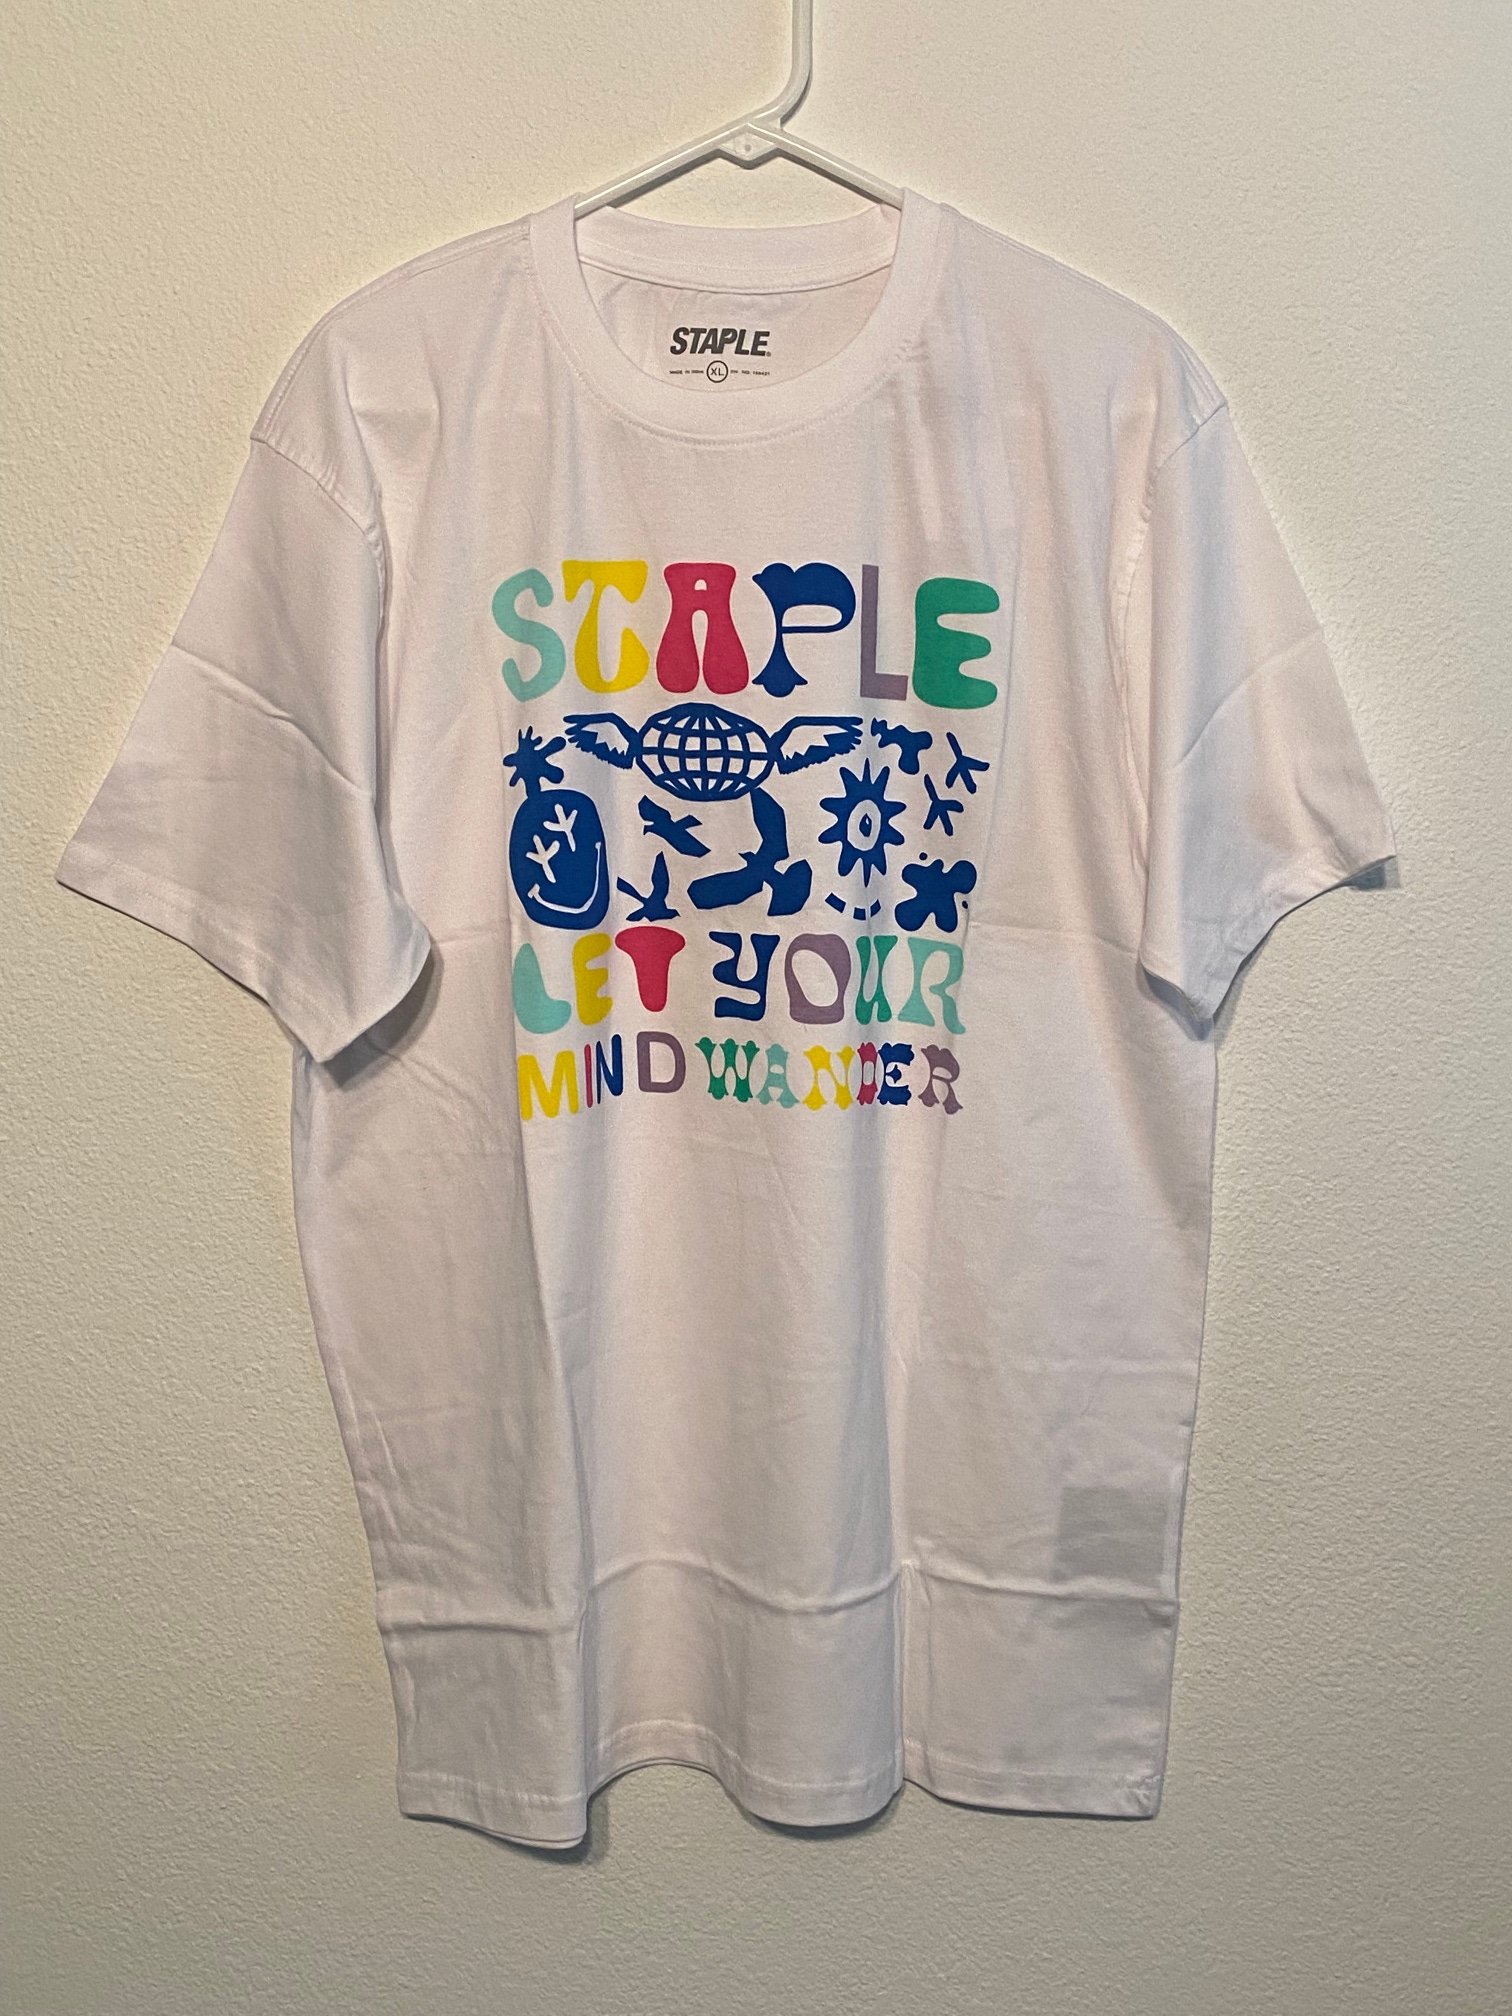 Staple Pigeon NYC Festival Men's Size XL White Graphic Skateboarding T Shirt New